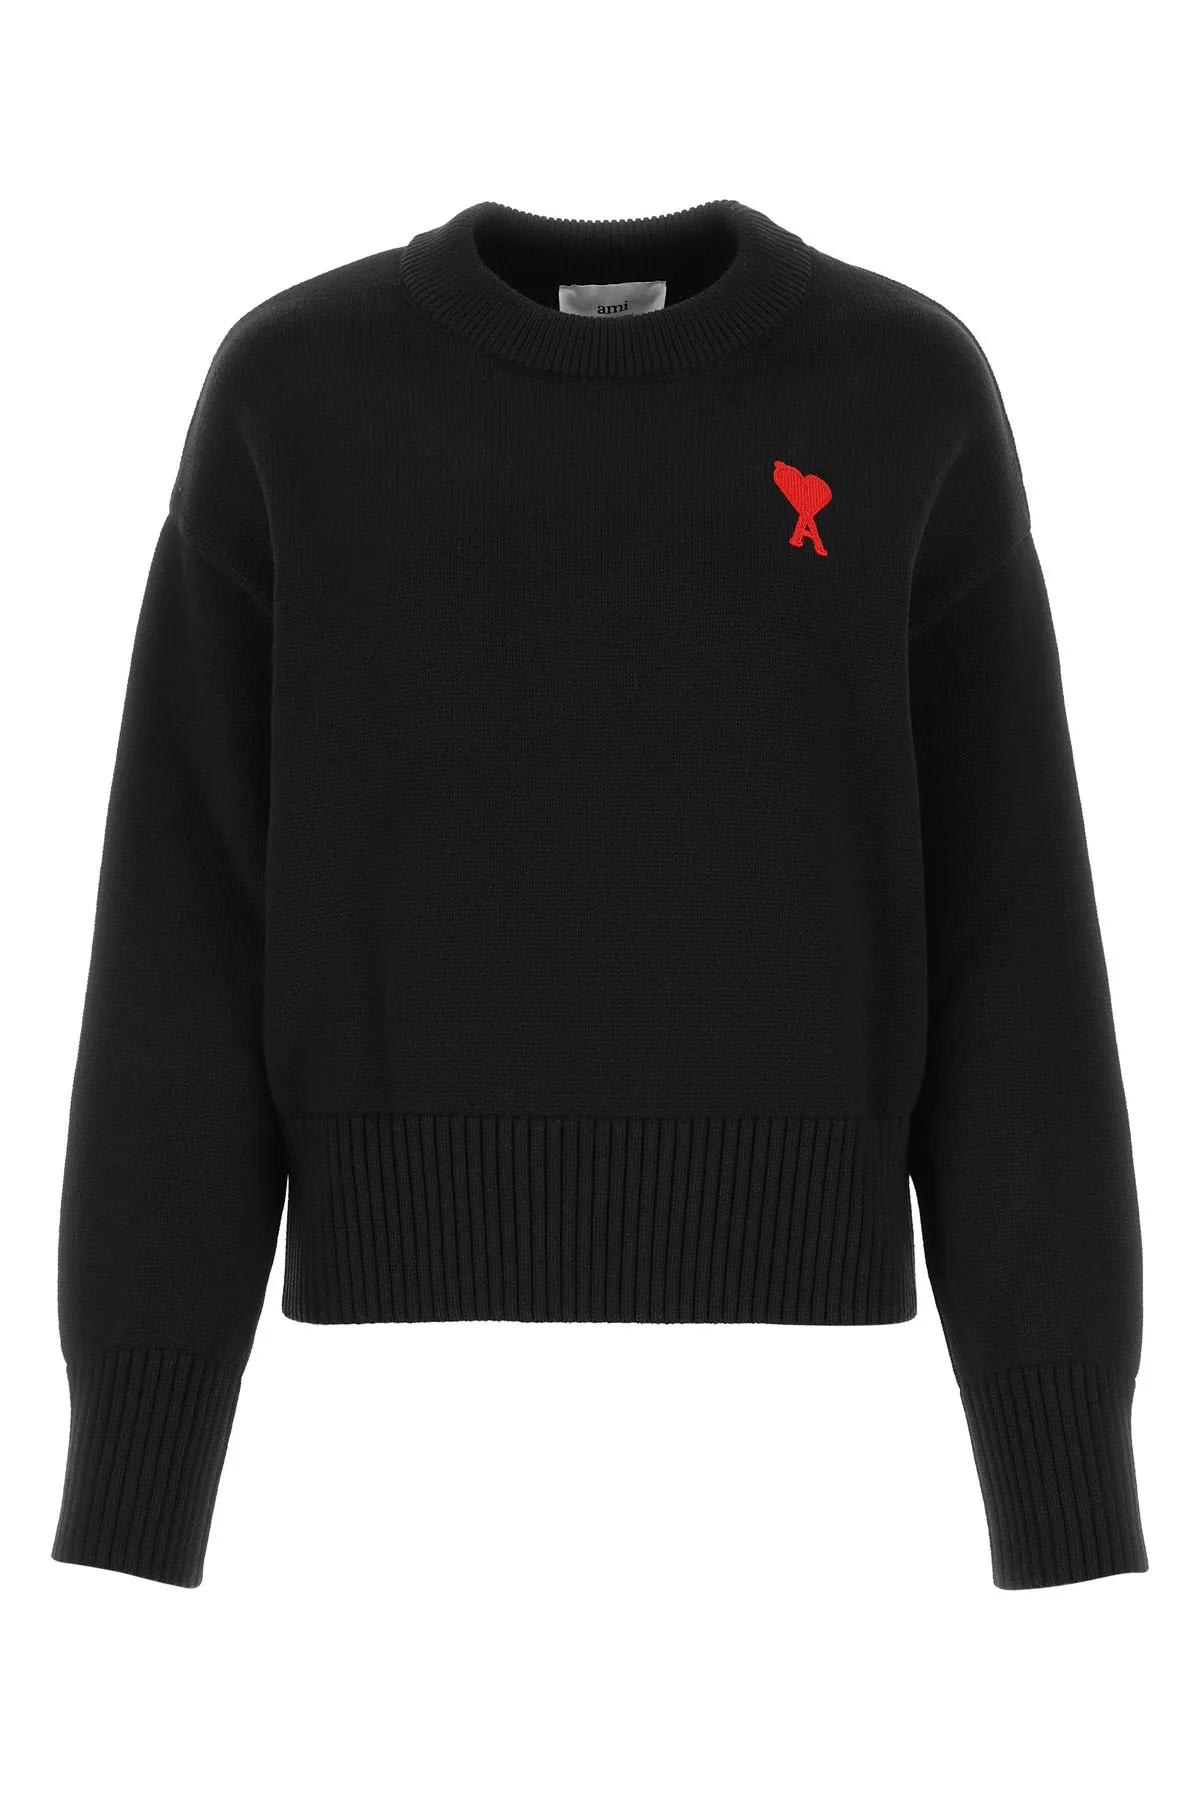 Ami Alexandre Mattiussi Black Cotton Blend Sweater